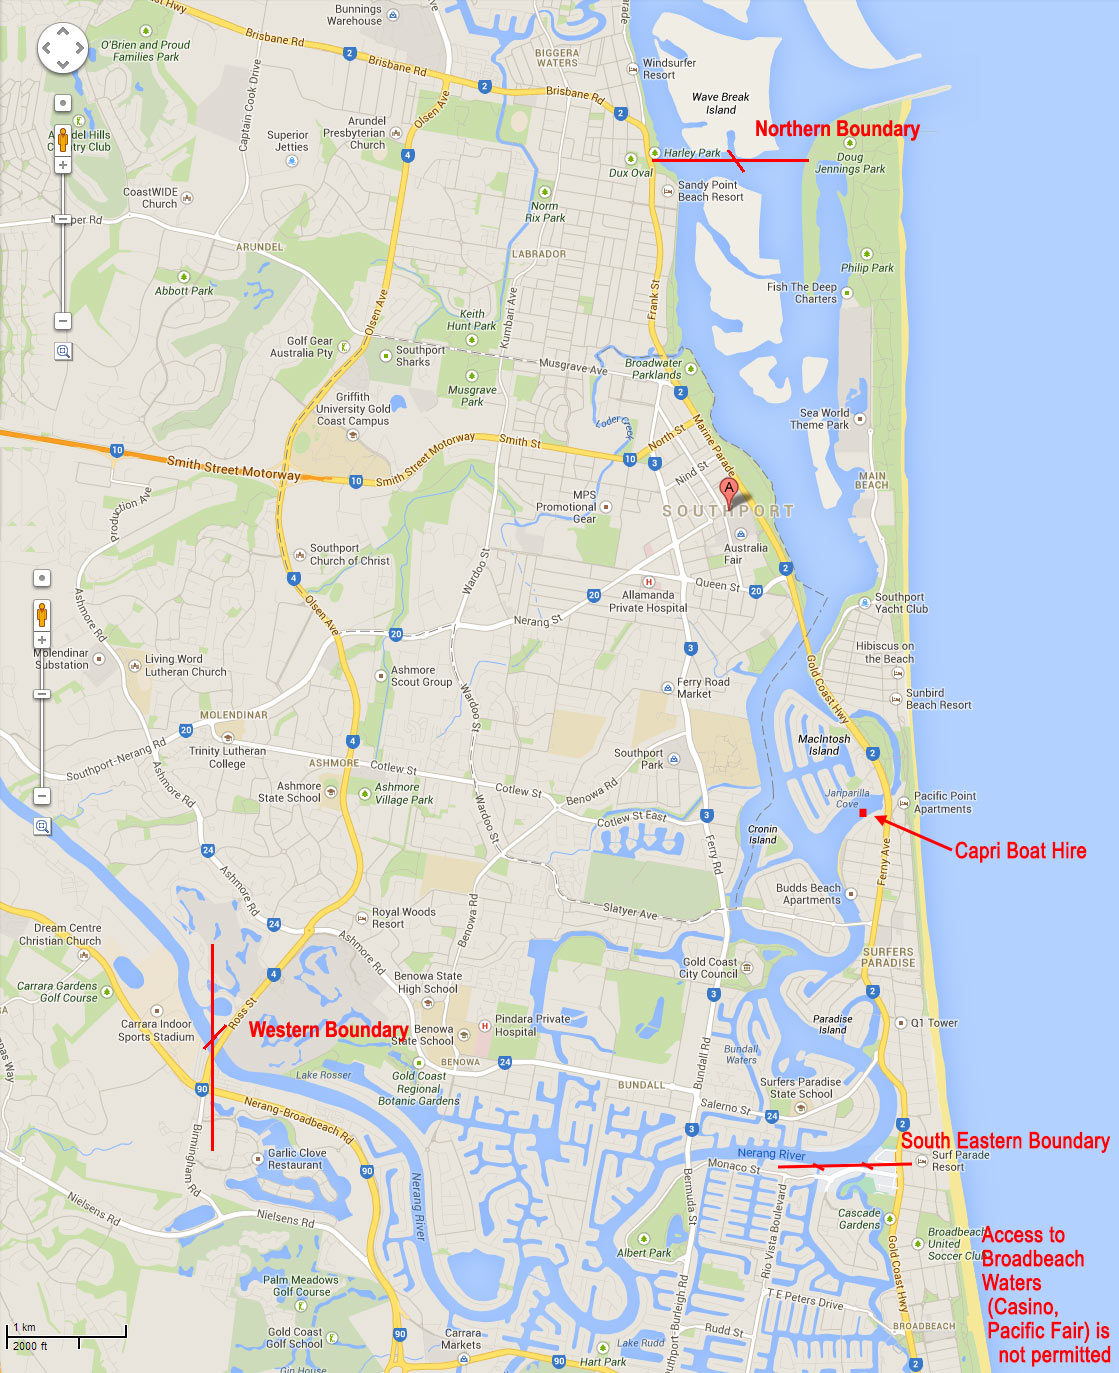 Boating карты. Gold Coast реки карта. Голд Кост горы карта. Популярные реки города Gold cost карта.